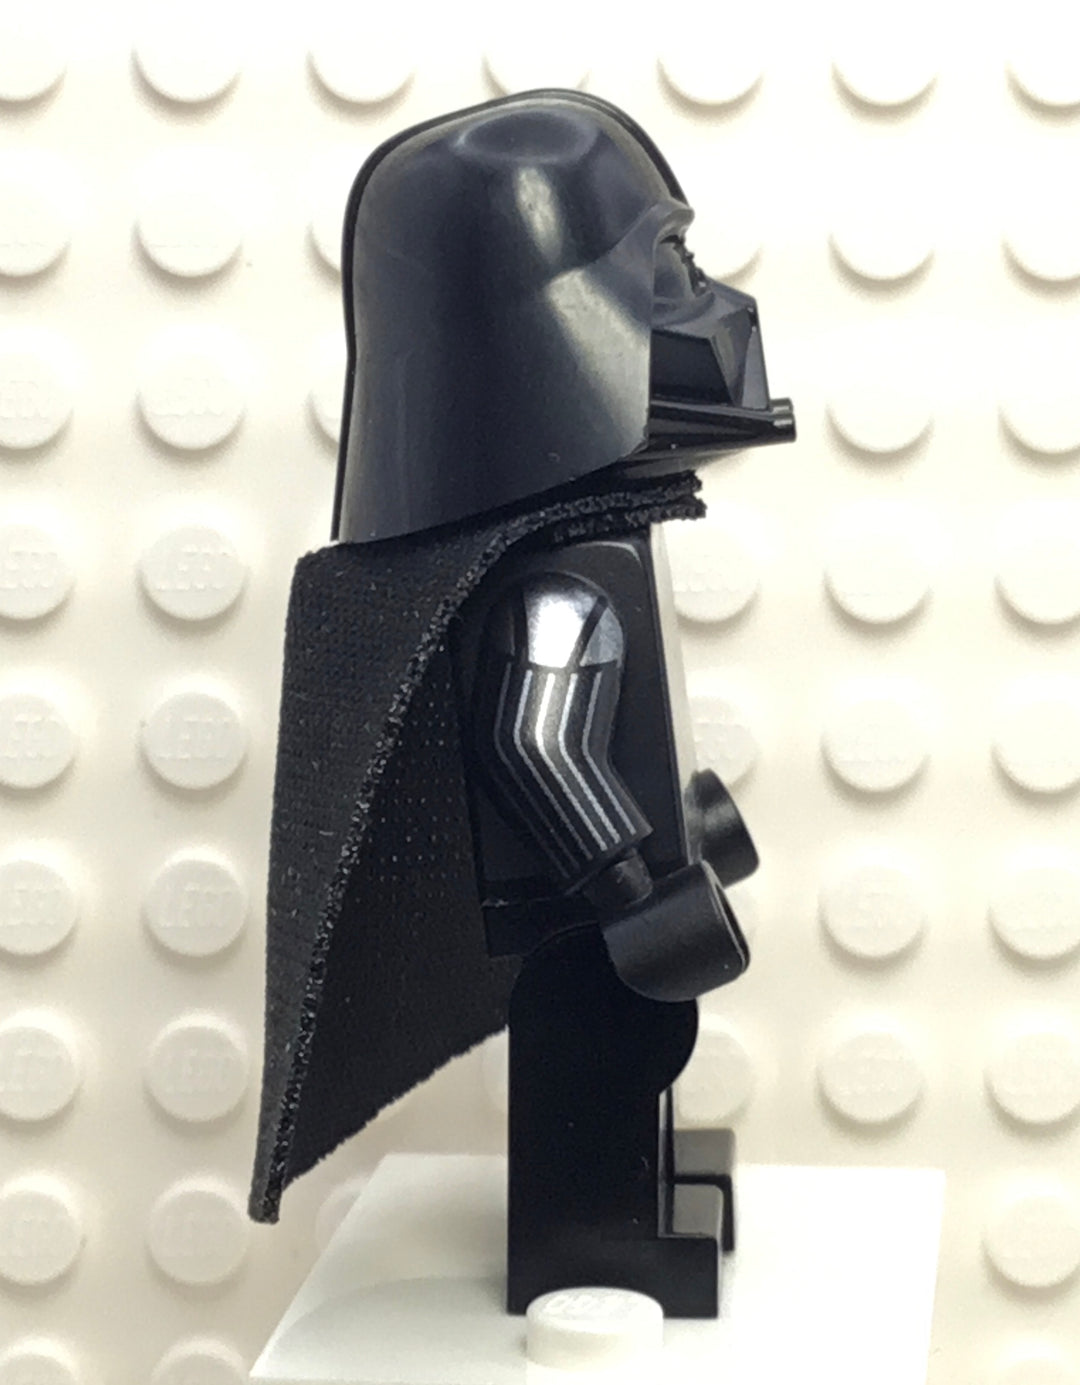 Lego Star Wars MINIFIGURE Darth Vader Battle Damaged -  Israel